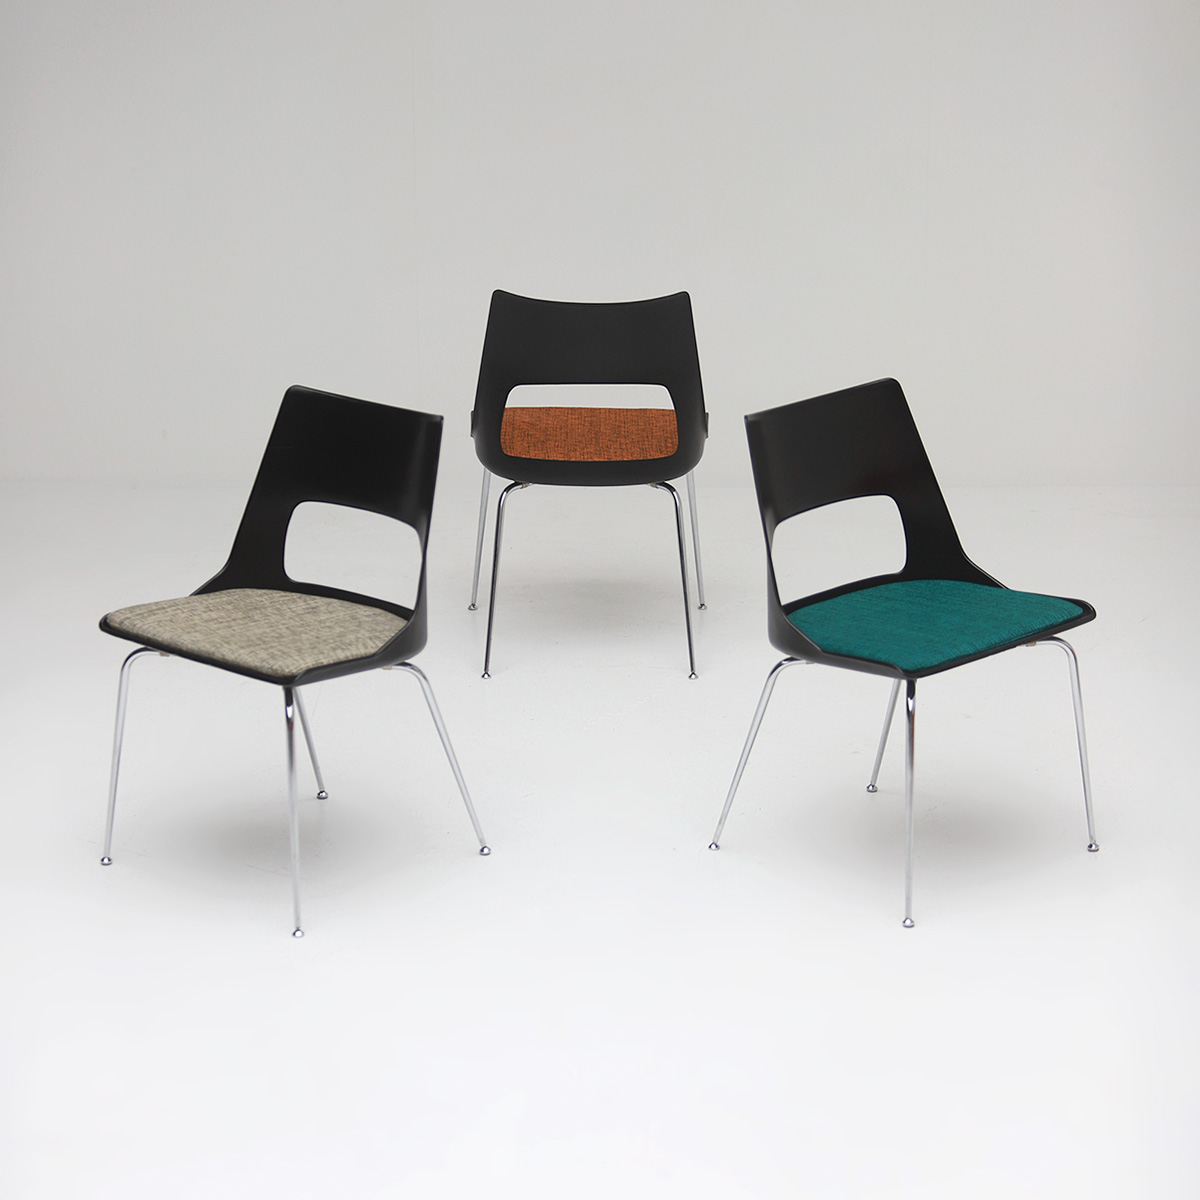 Set of three Modern Kay Korbing chairs for Fibrex Danmark